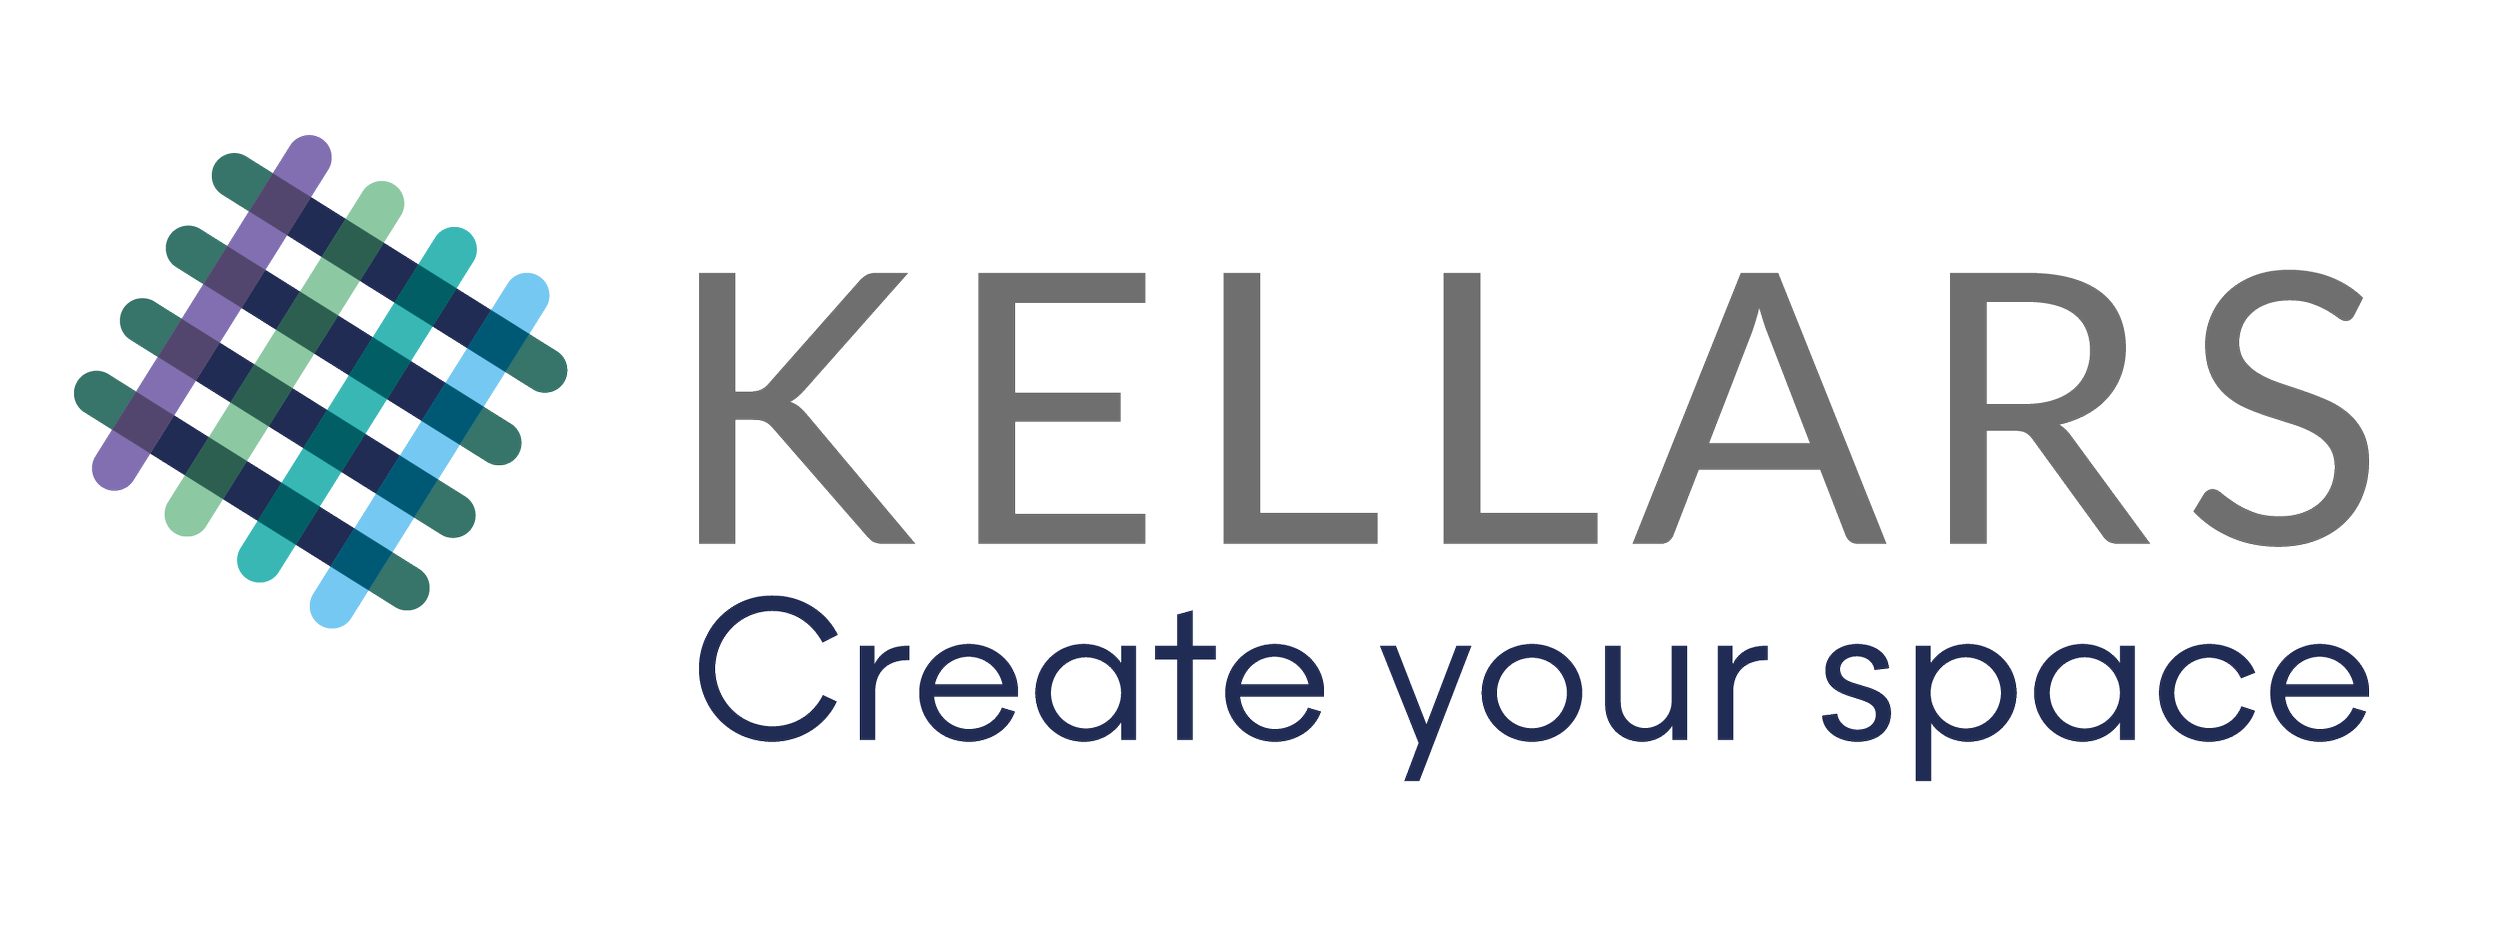 Kellars-New-Full-Colour-01-1.png